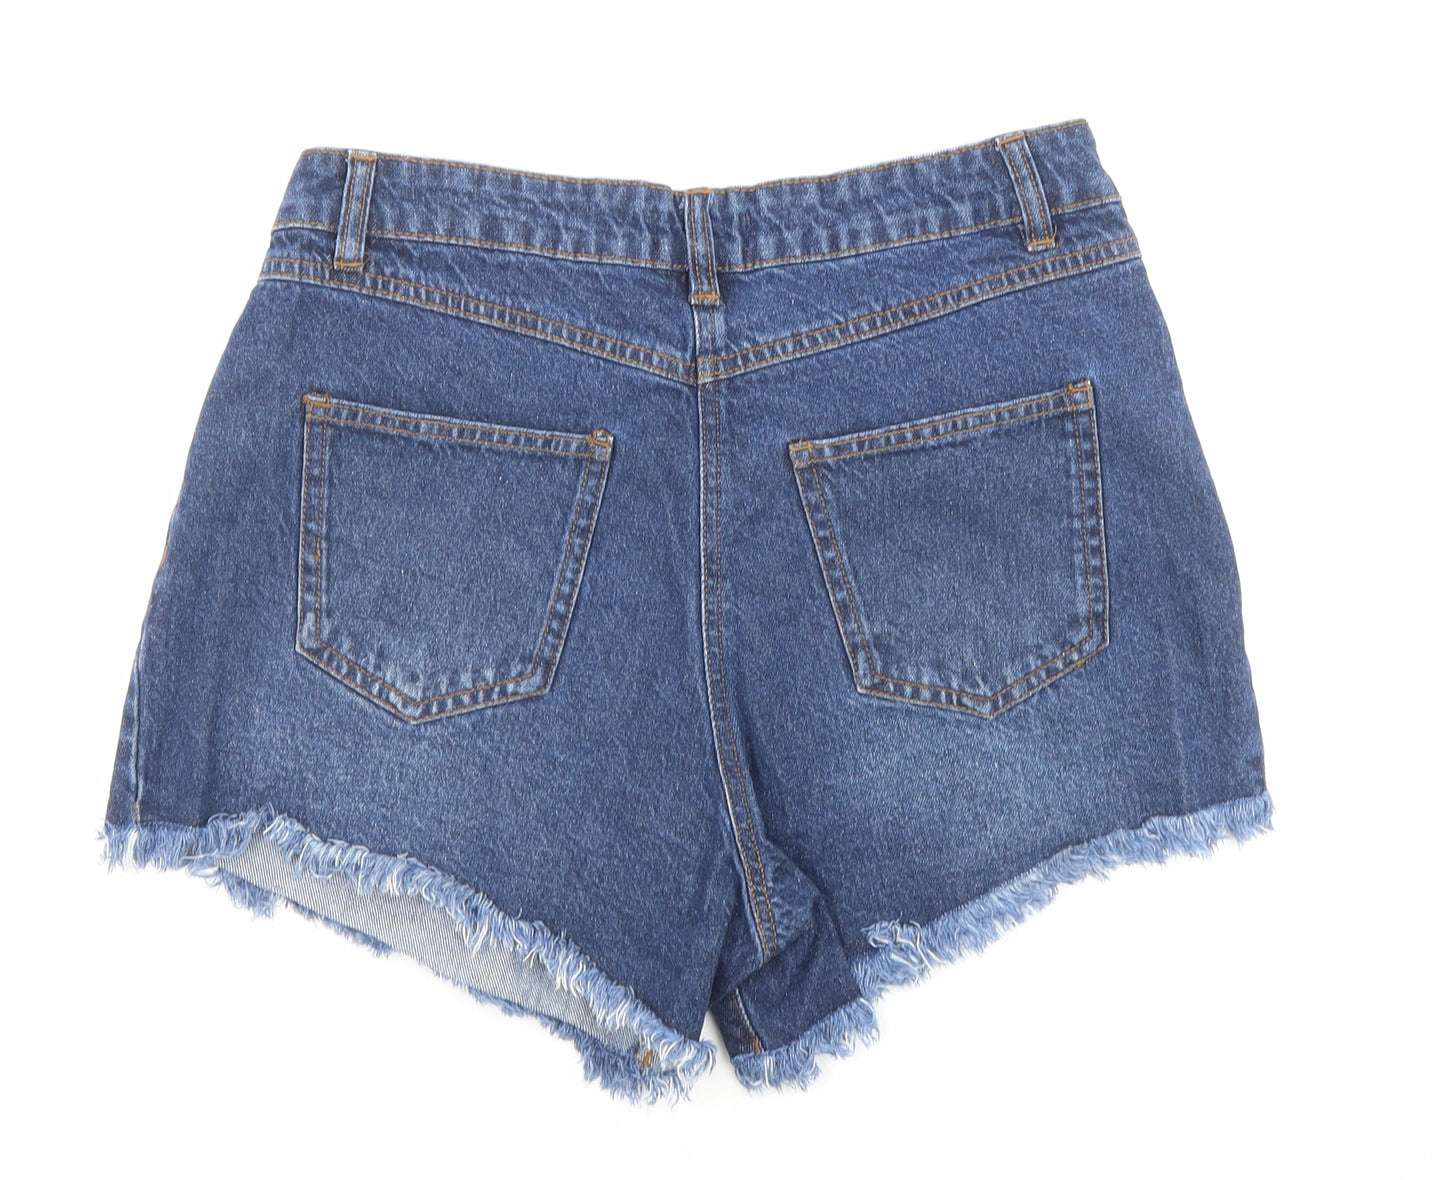 Papaya Womens Blue Cotton Cut-Off Shorts Size 10 Regular Zip